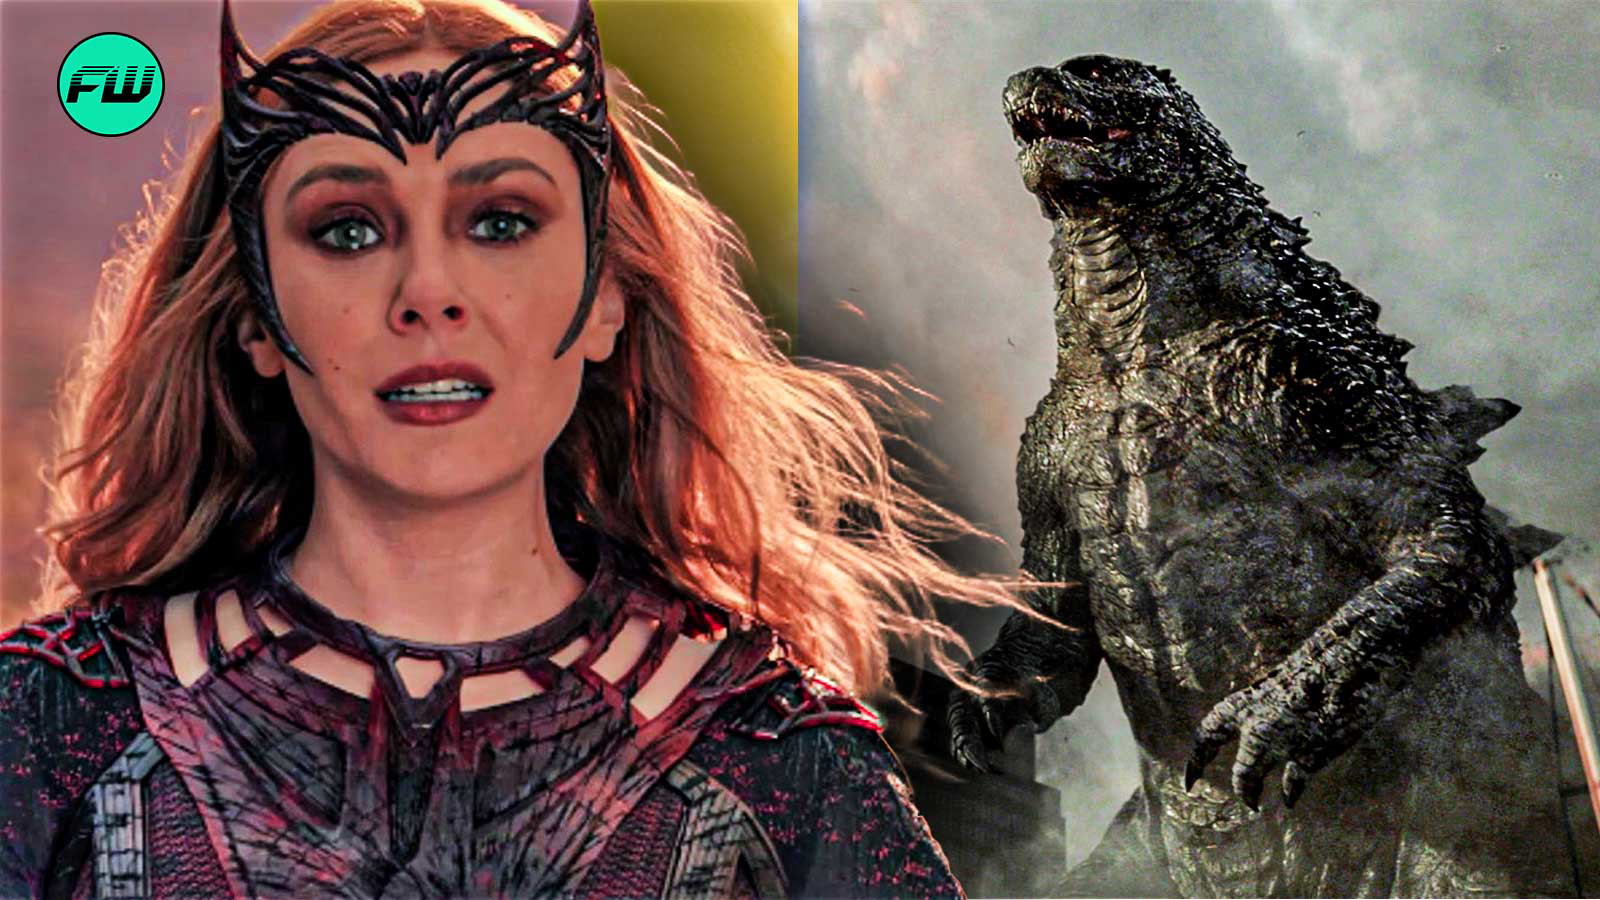 Elizabeth Olsen and Godzilla